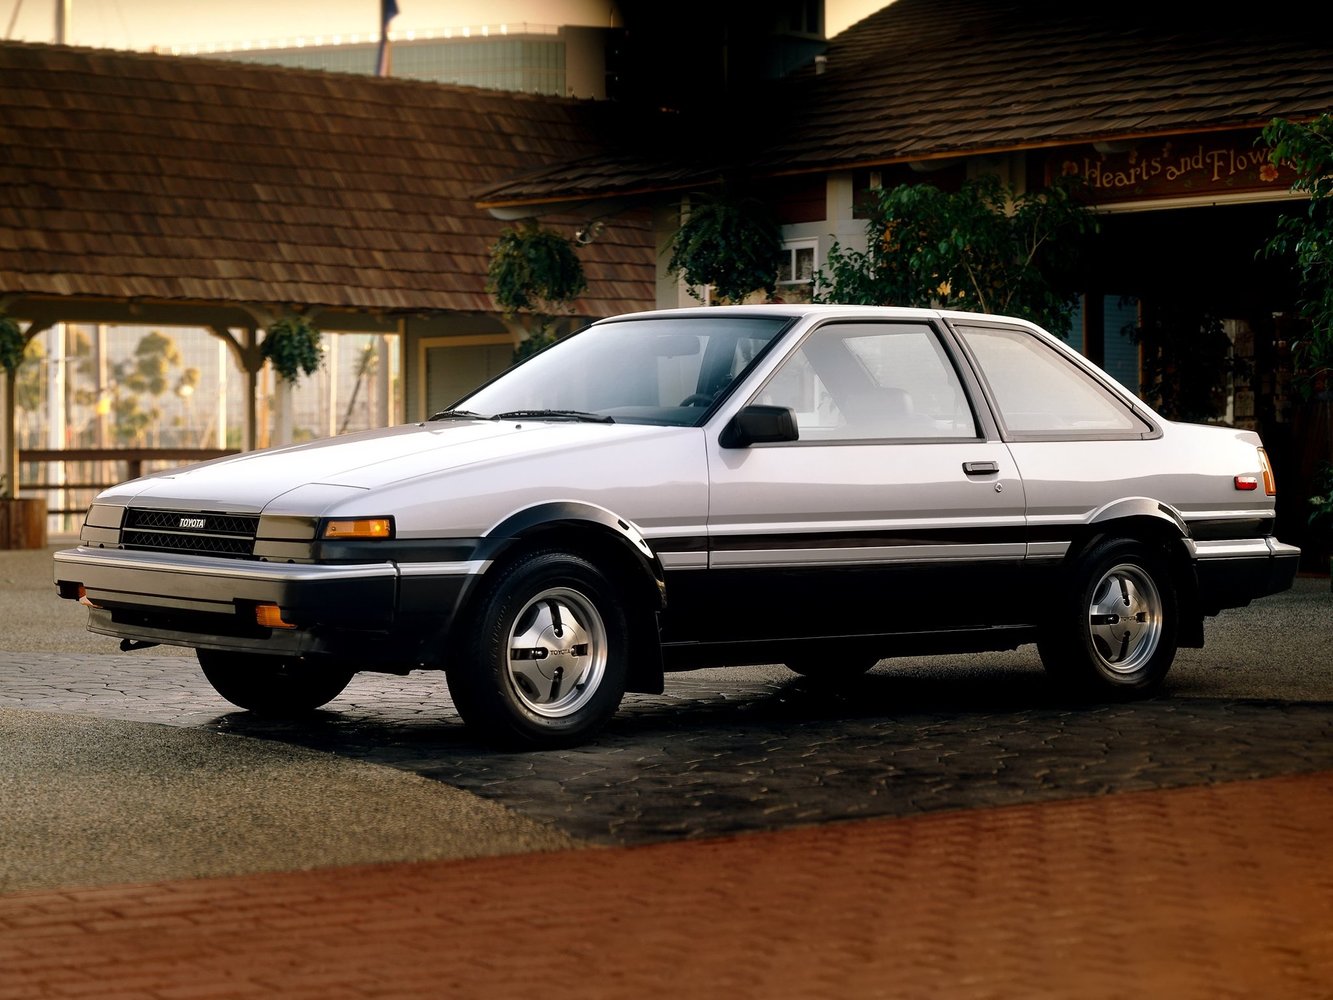 Toyota Corolla 1983 - 1987